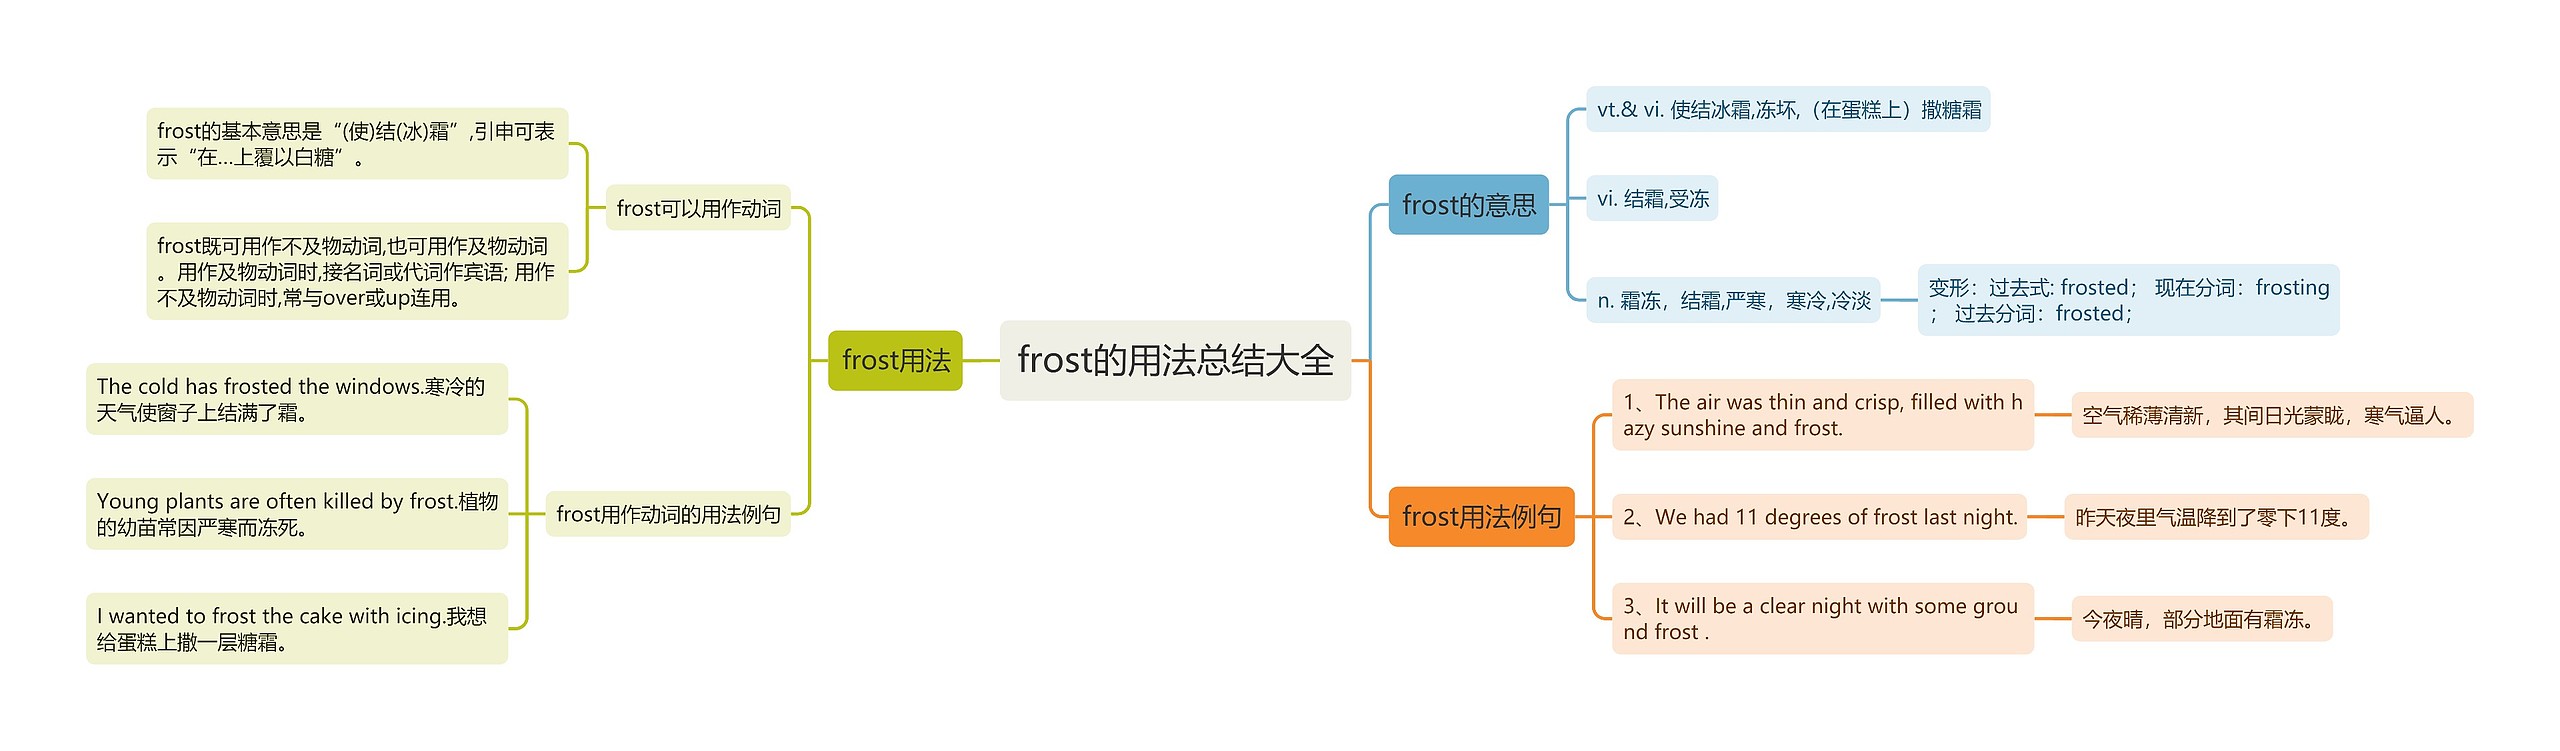 frost的用法总结大全思维导图